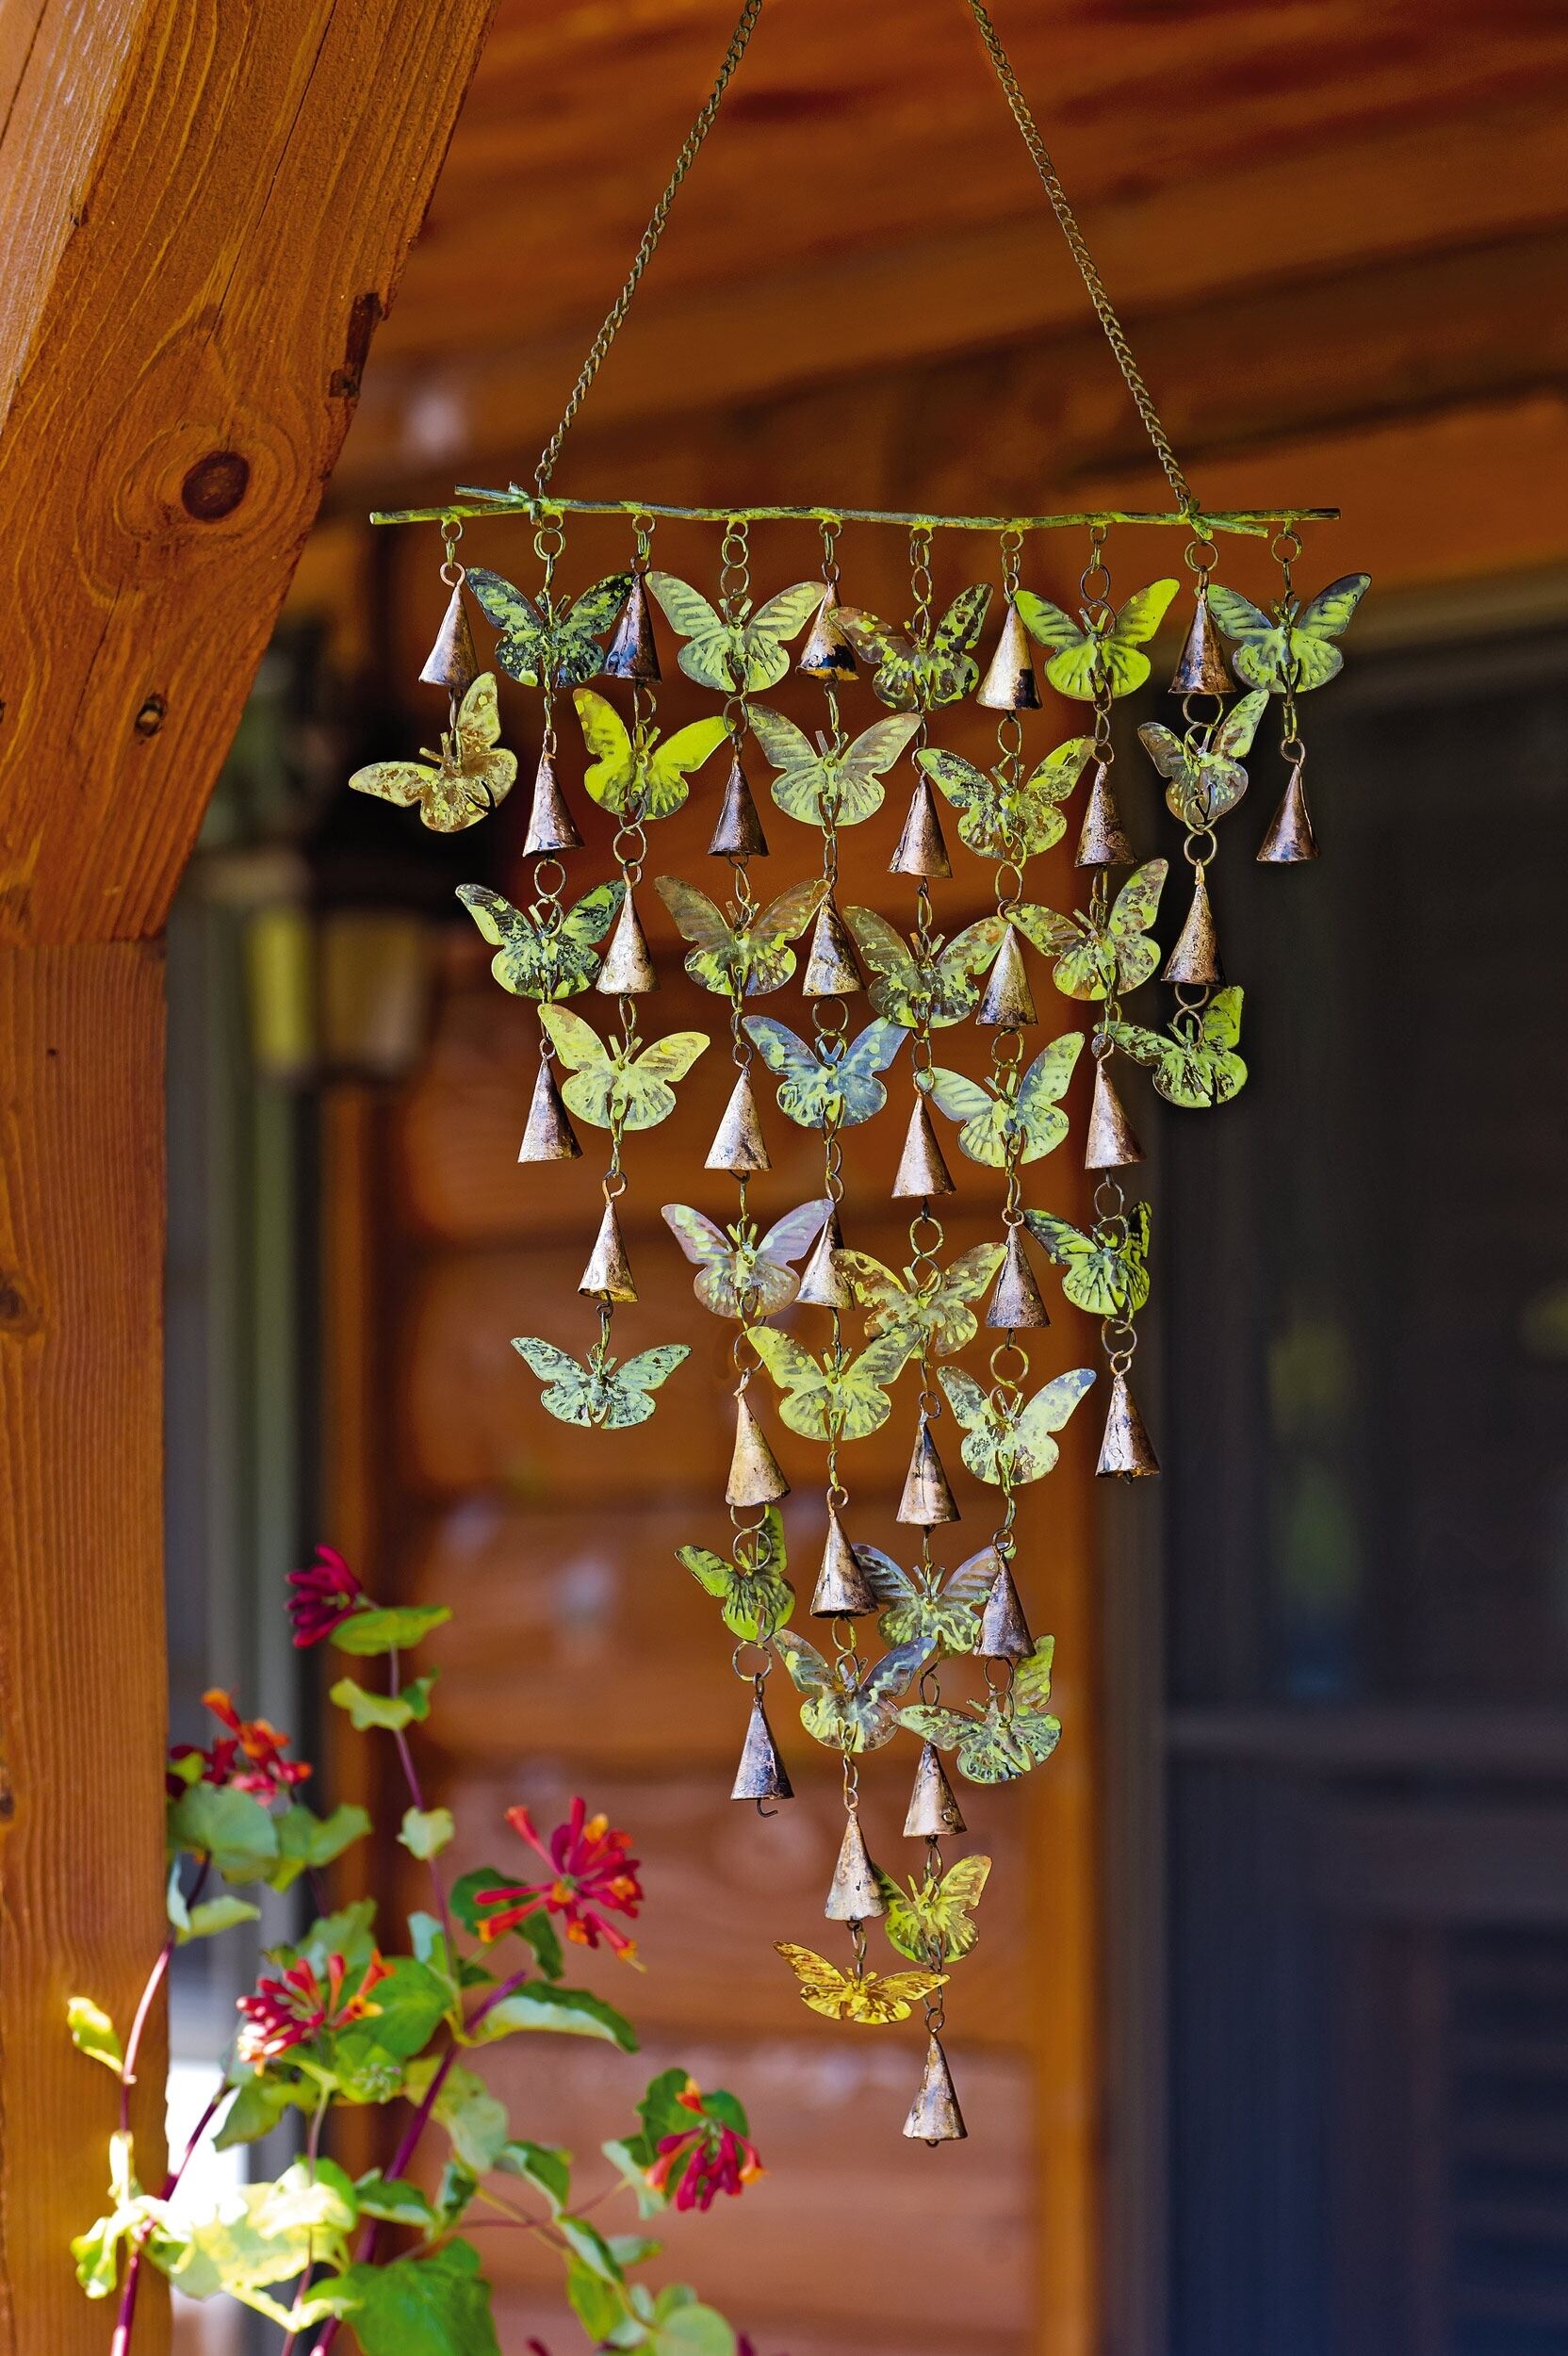 Outdoor Décor Color Butterfly Bell Solar Butterfly Wind Chimes Butterfly Gifts Solar Bell Butterfly Lights Outdoor Solar Hanging Lights Gardening Gifts for mom Garden Decor Solar Decorative Mobiles 